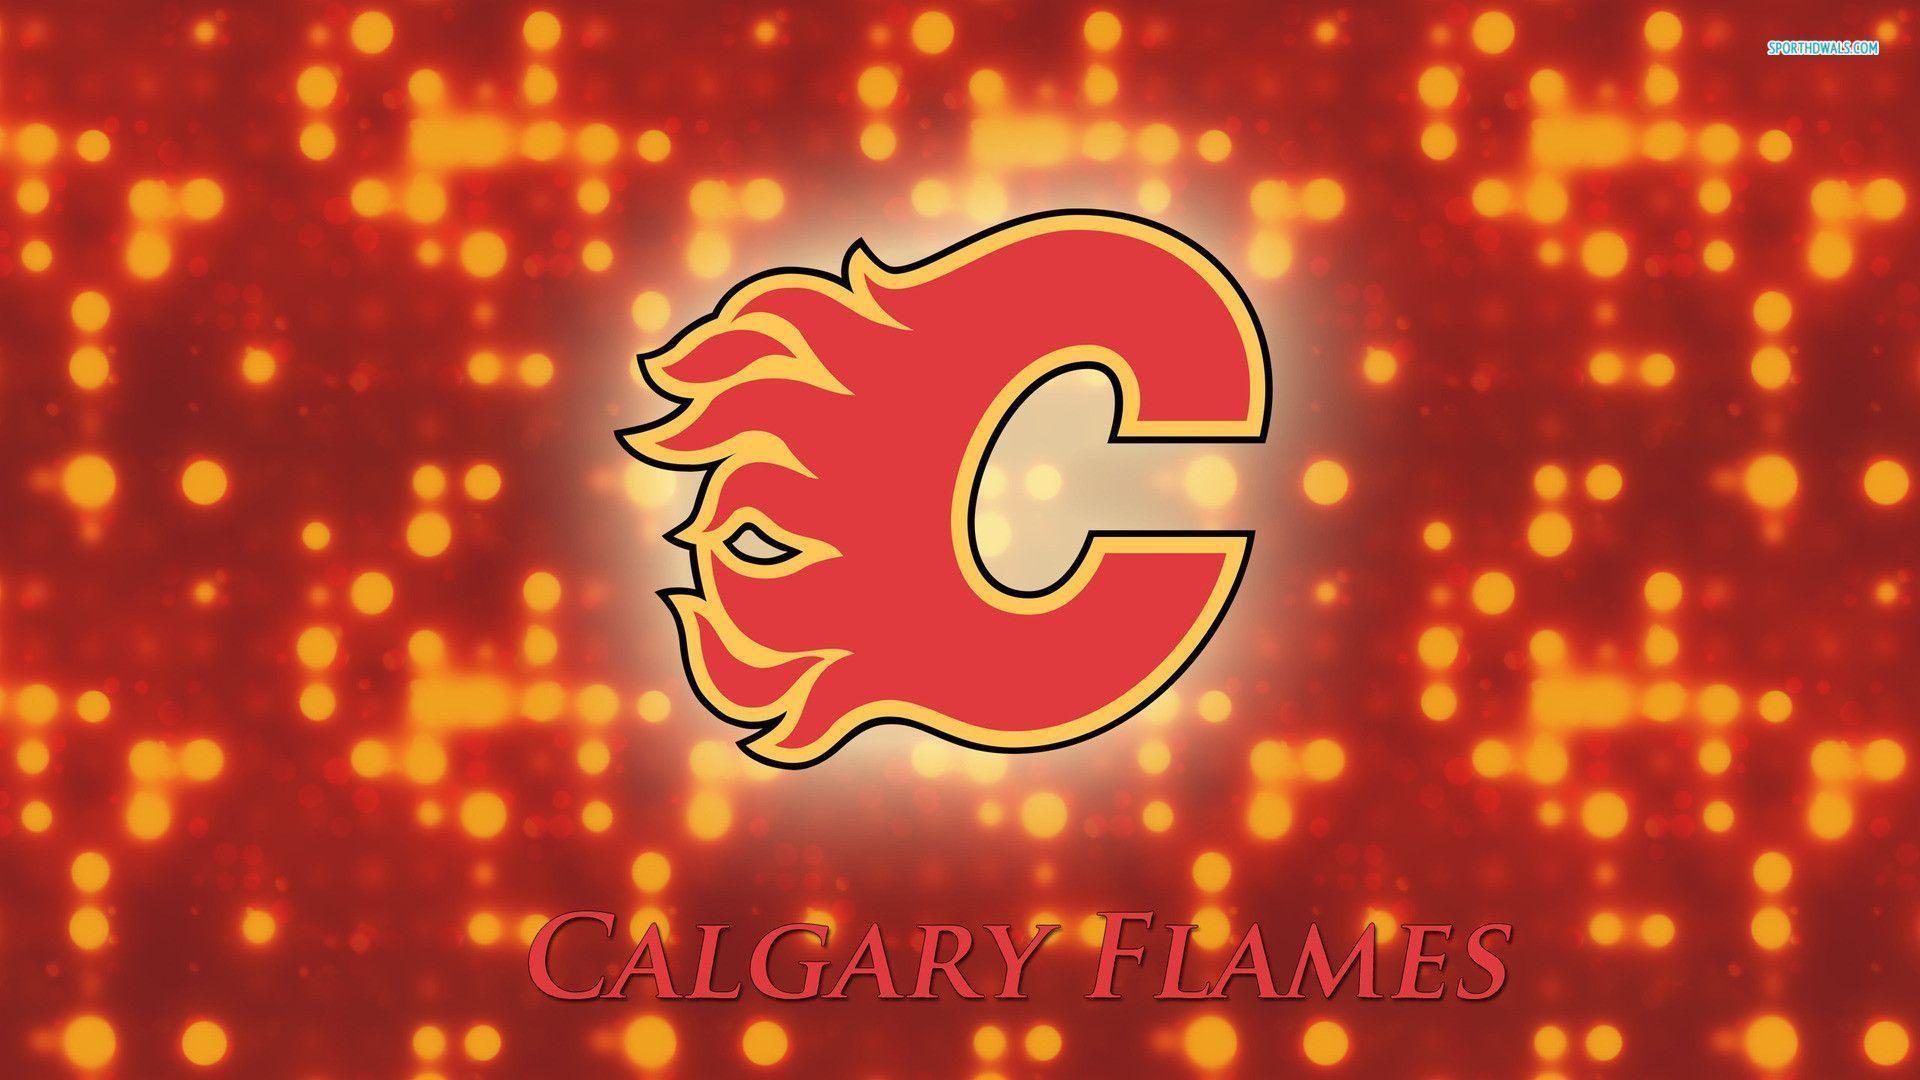 calgary flames wallpaper - Hockey & Sports Background Wallpapers on Desktop  Nexus (Image 1454220)